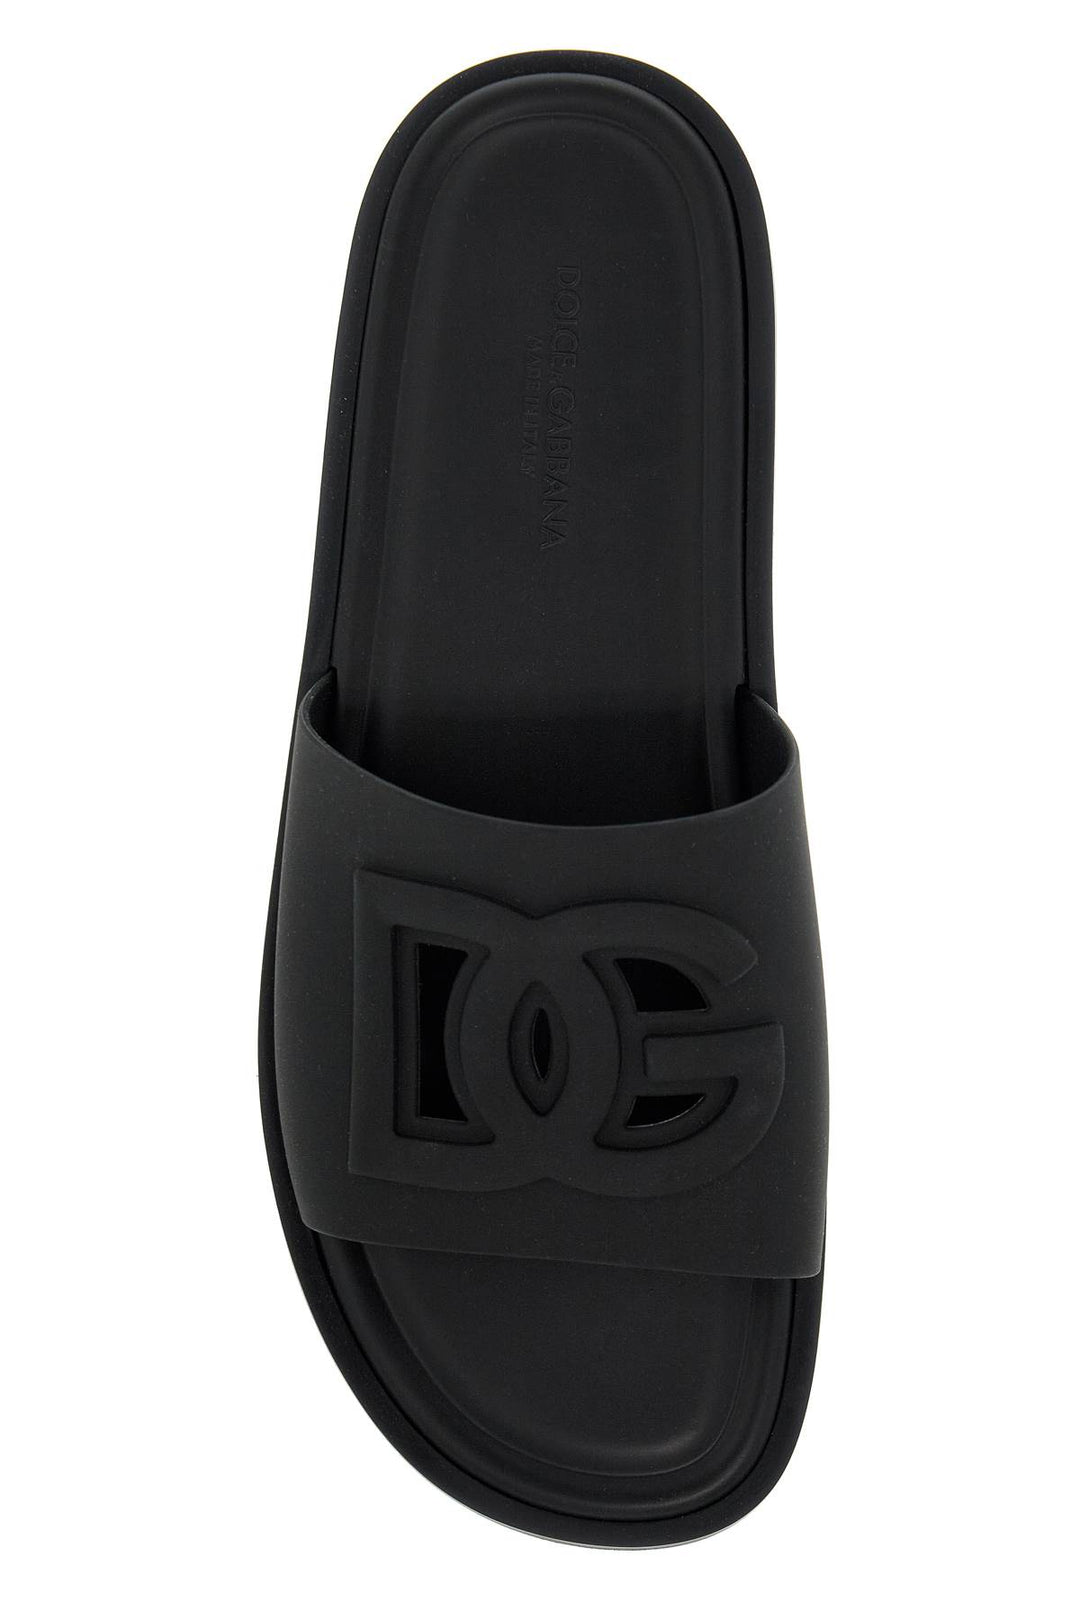 Dolce & Gabbana Dg Rubber Slides   Black